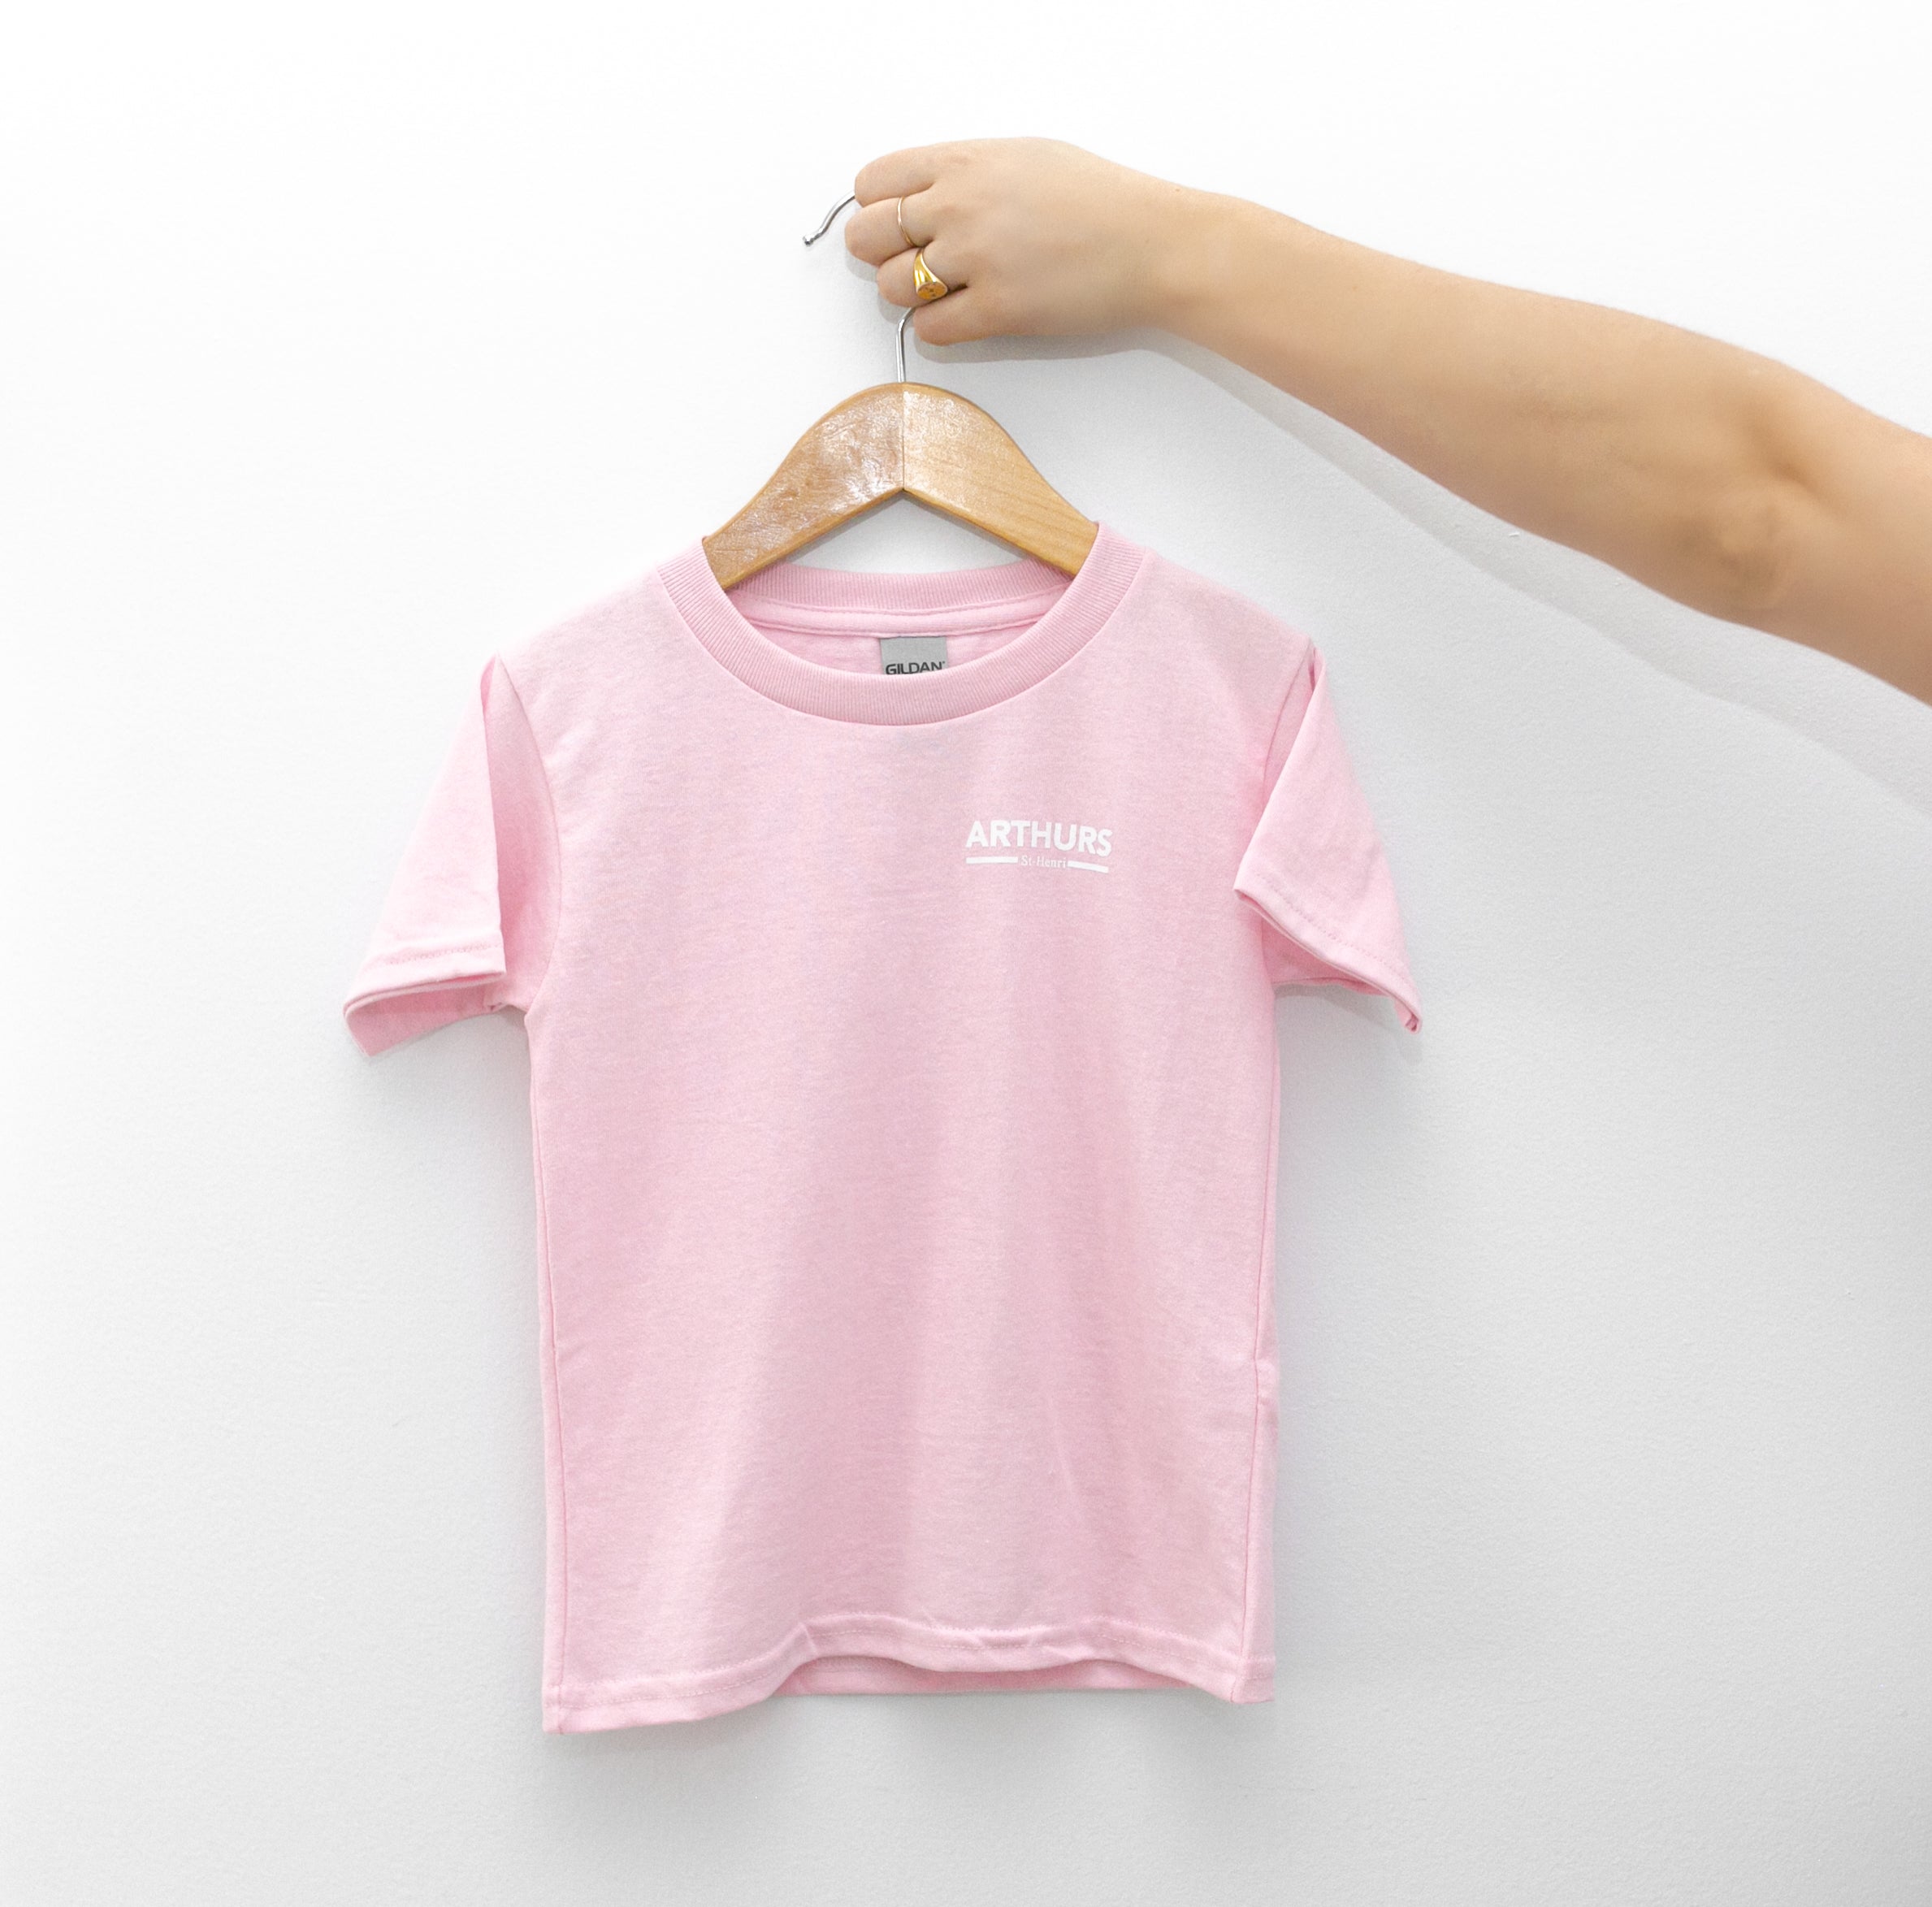 Pink Arthurs Toddler T-shirt